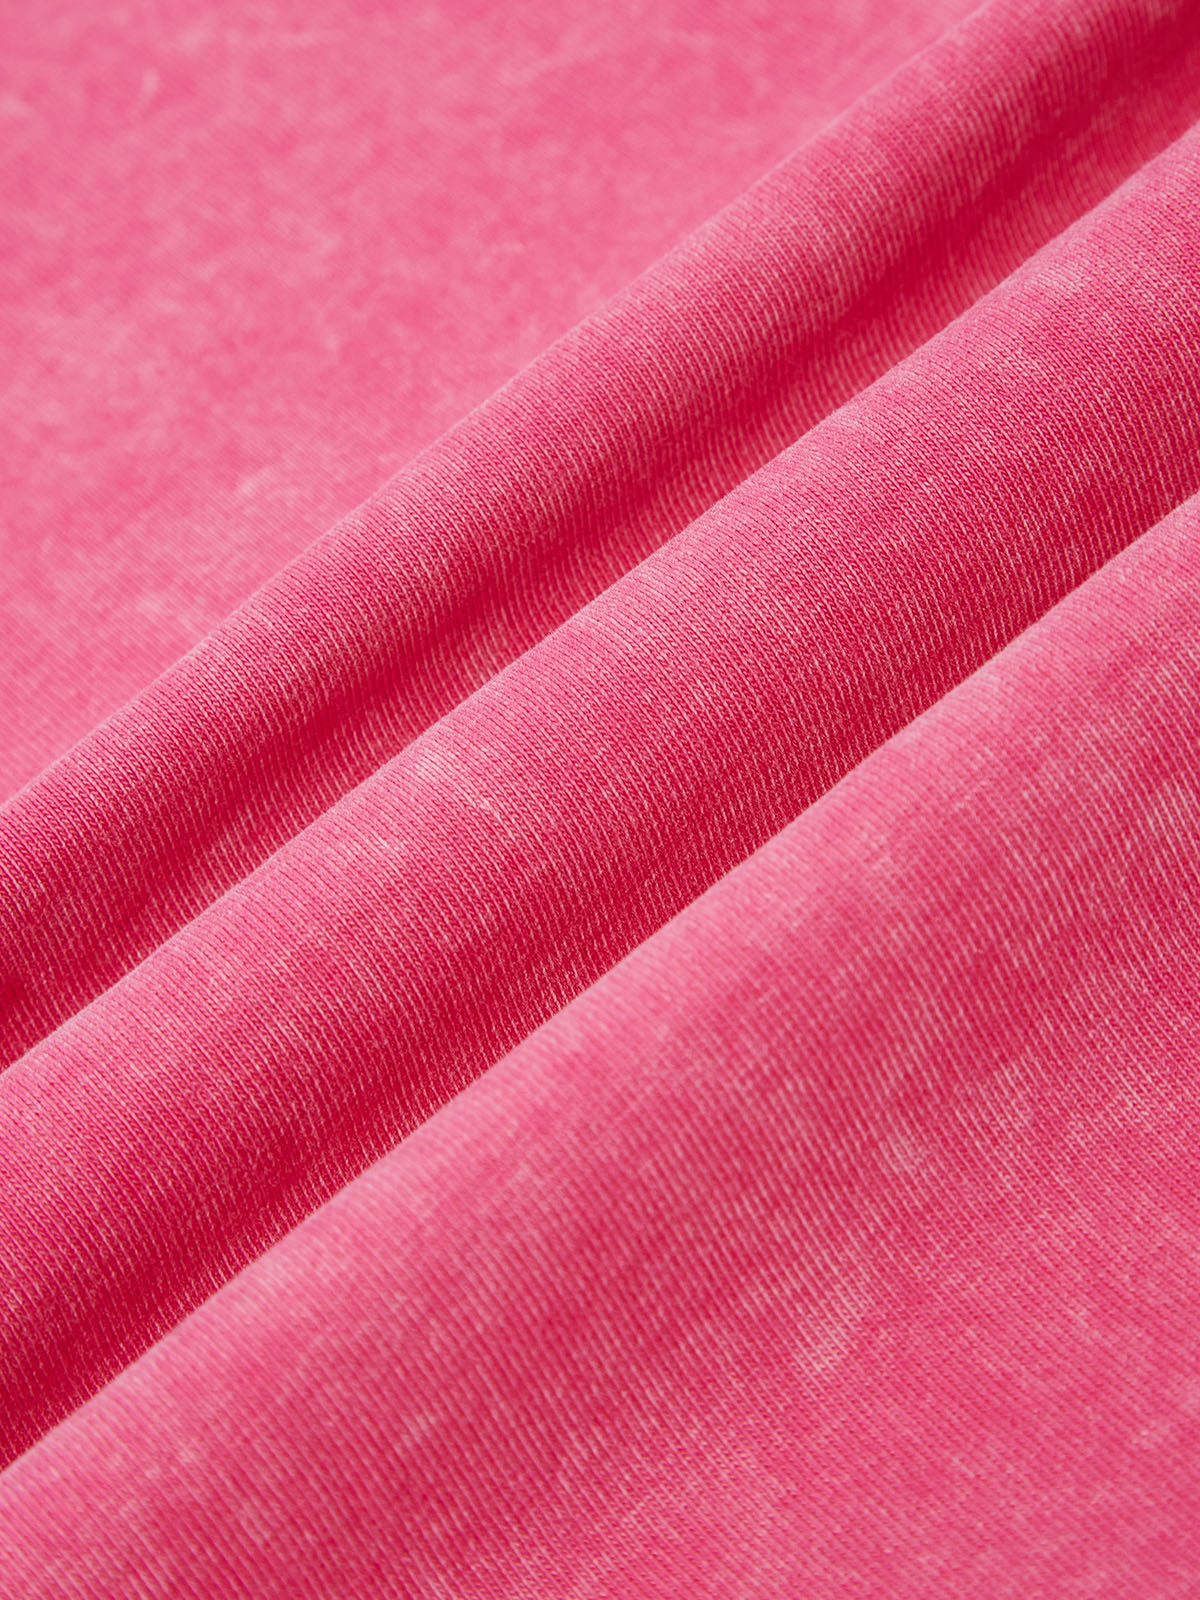 BOUNCE BACK© Lip & Teeth Print Pink T-shirt